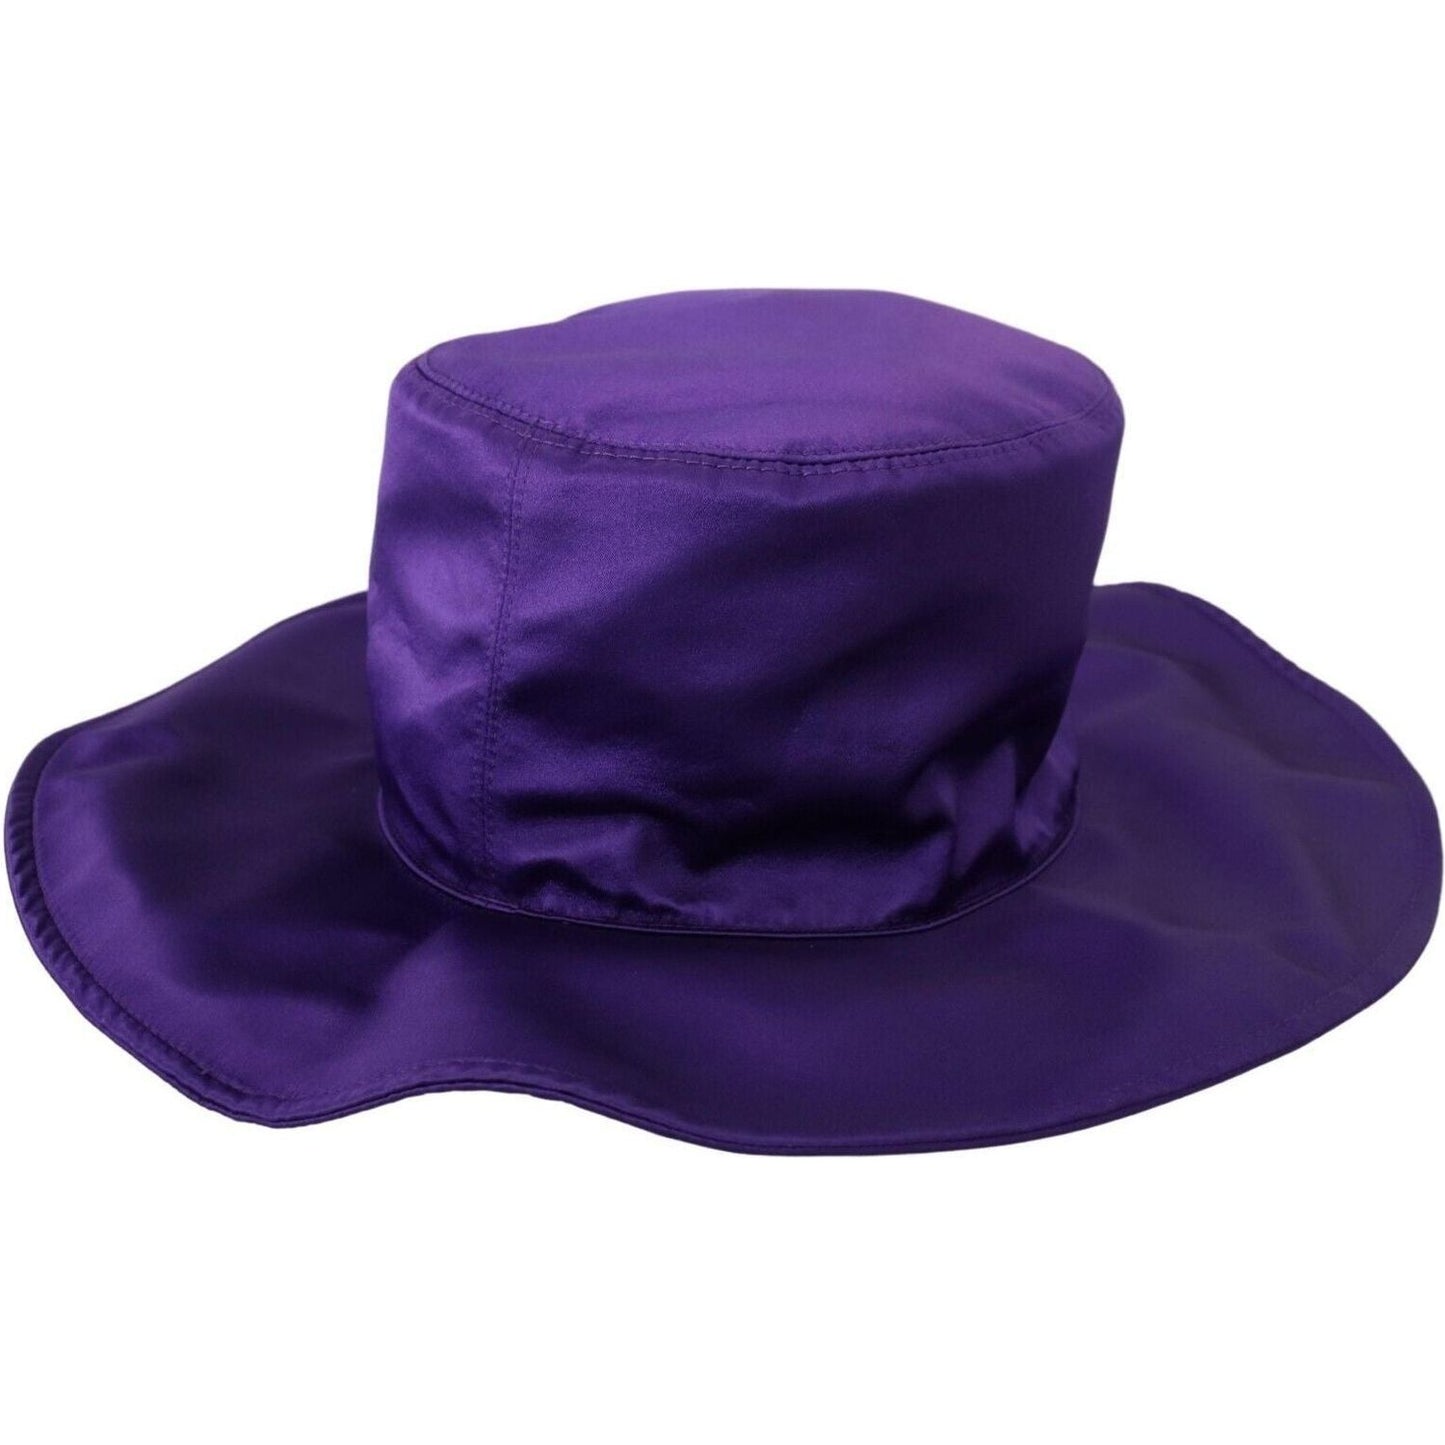 Dolce & Gabbana Elegant Purple Silk Top Hat purple-silk-stretch-top-hat s-l1600-72-3-a8227fc8-c2b.jpg